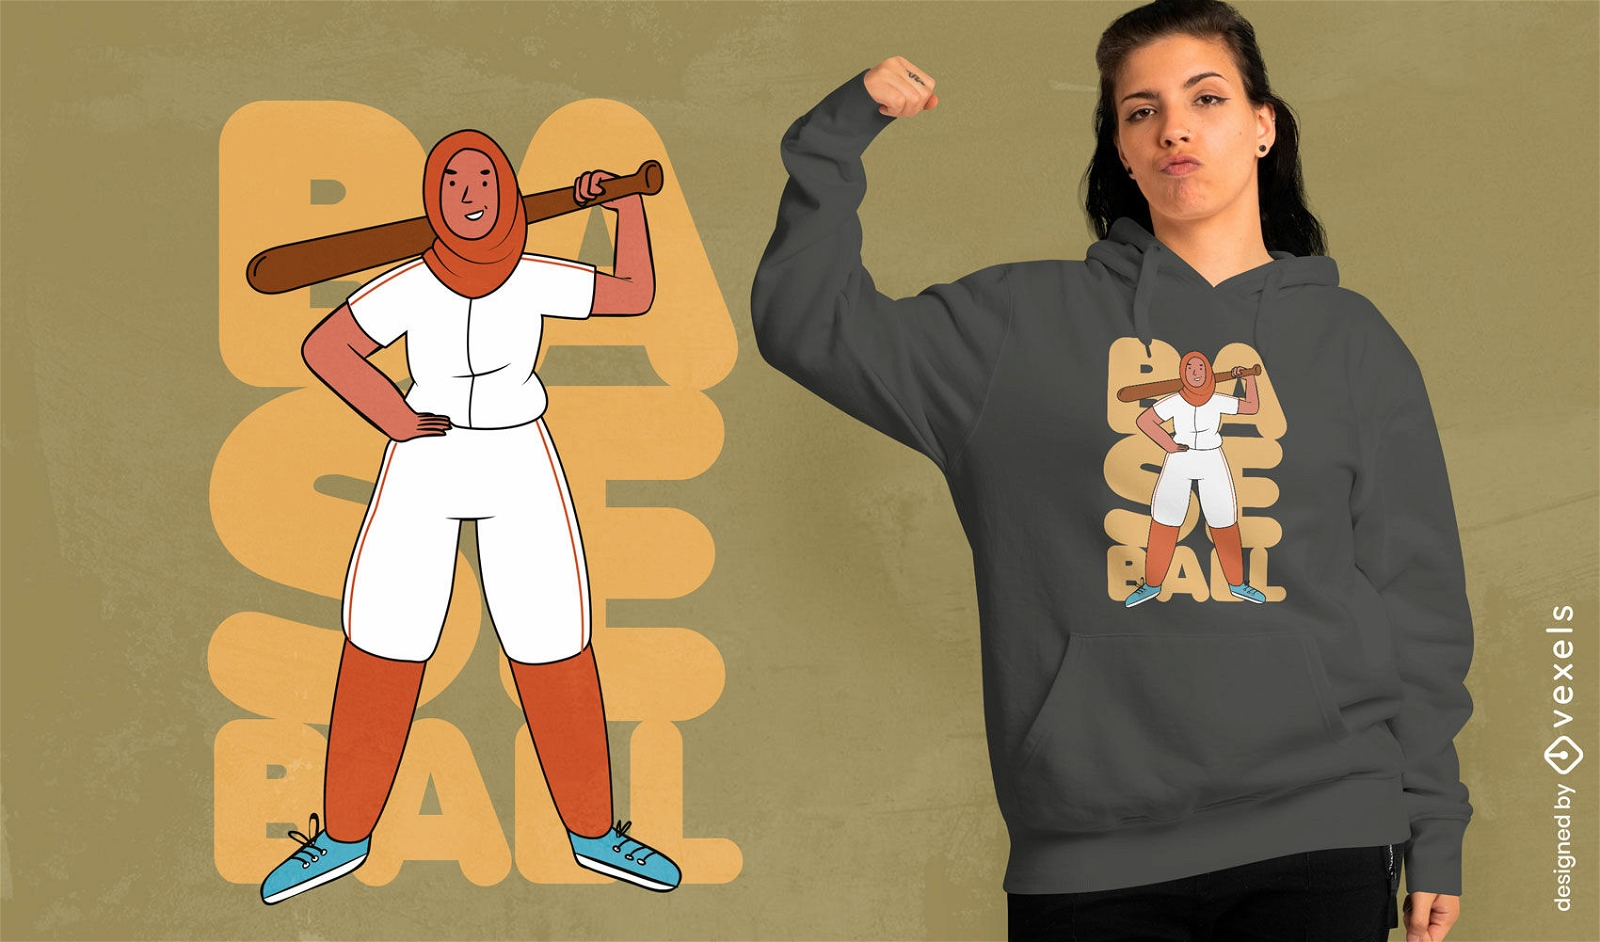 Baseball hijab girl t-shirt design